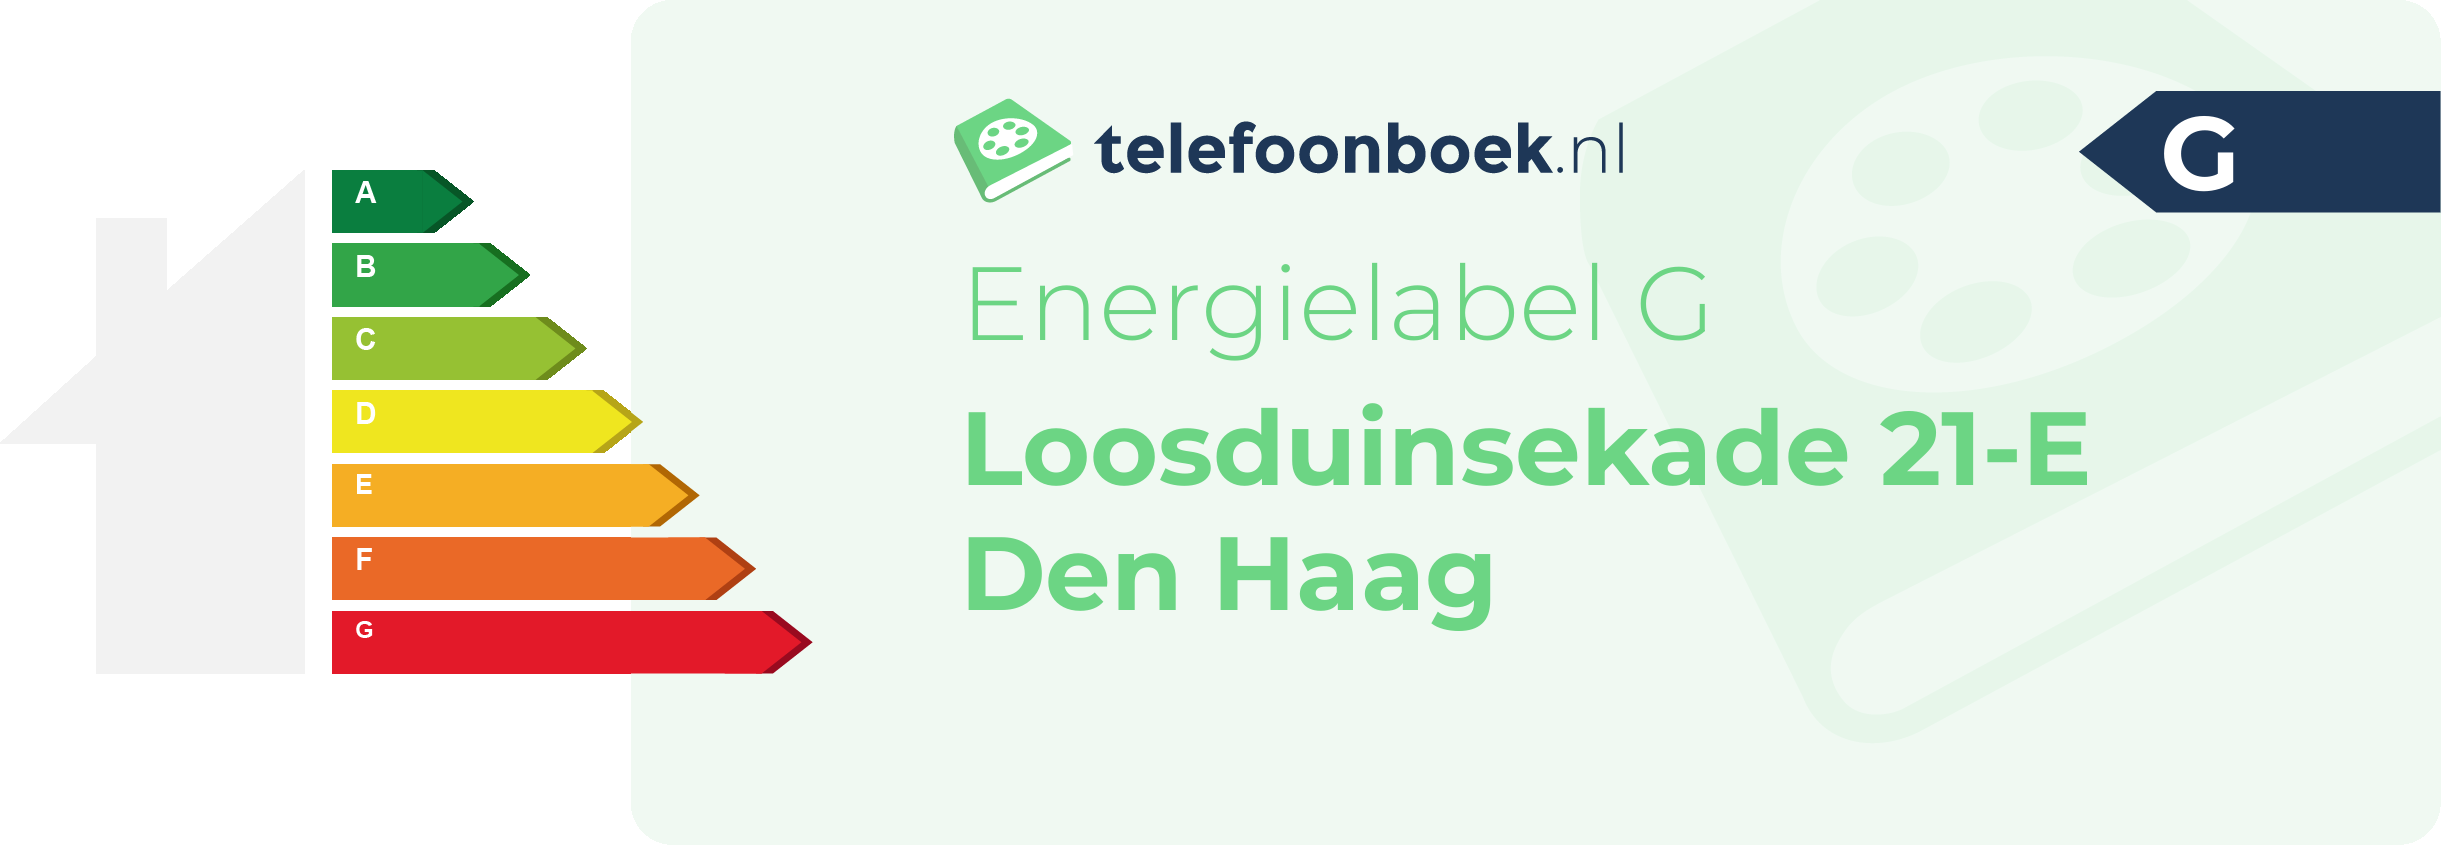 Energielabel Loosduinsekade 21-E Den Haag